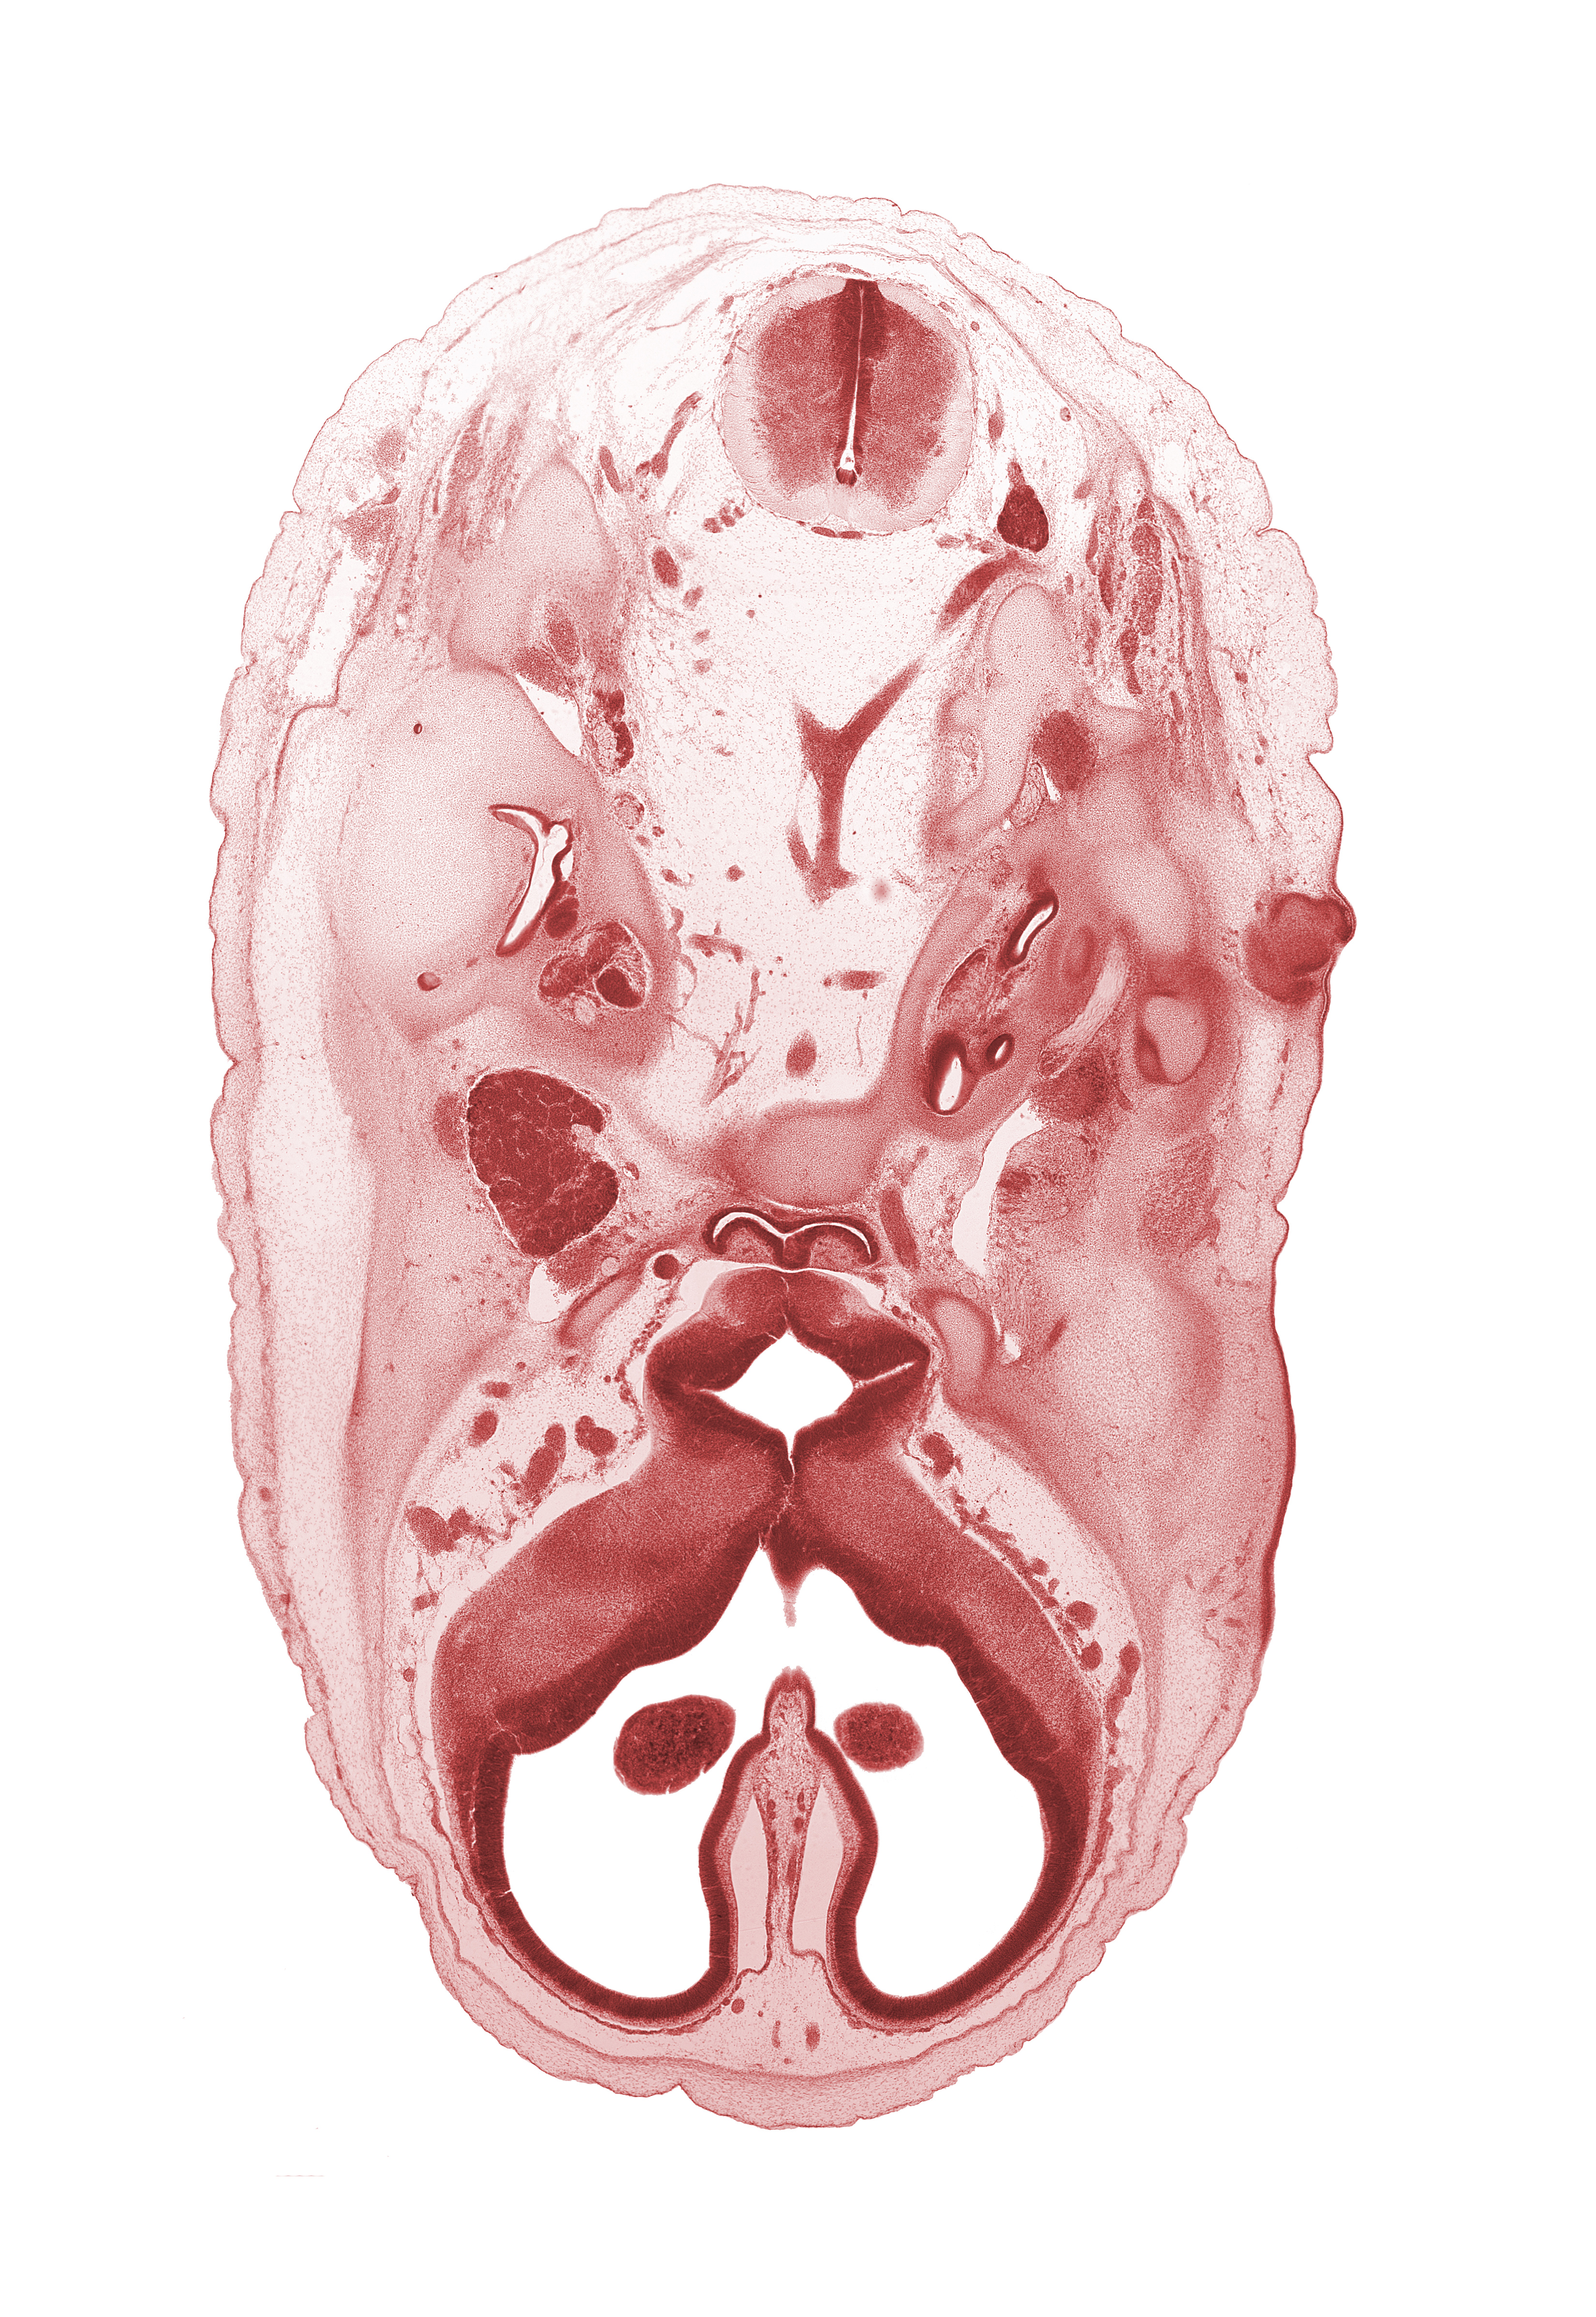 C-1 spinal ganglion, abducens nerve (CN VI), adenohypophysis, anterior cerebral artery, artifact separation(s), basi-occipital (basal plate), basilar artery, central canal, cerebral vesicle (telencephalon), dorsal funiculus, facial nerve (CN VII), hypoglossal nerve (CN XII), interventricular foramen, junction of vertebral arteries, lateral funiculus, lateral ventricle, mandibular nerve (CN V₃), maxillary nerve (CN V₂), medial ventricular eminence (diencephalon), ophthalmic nerve (CN V₁), optic canal, orbitosphenoid, spinal accessory nerve (CN XI), third ventricle, tip of cochlear duct, vagus nerve (CN X), ventral funiculus, vertebral artery